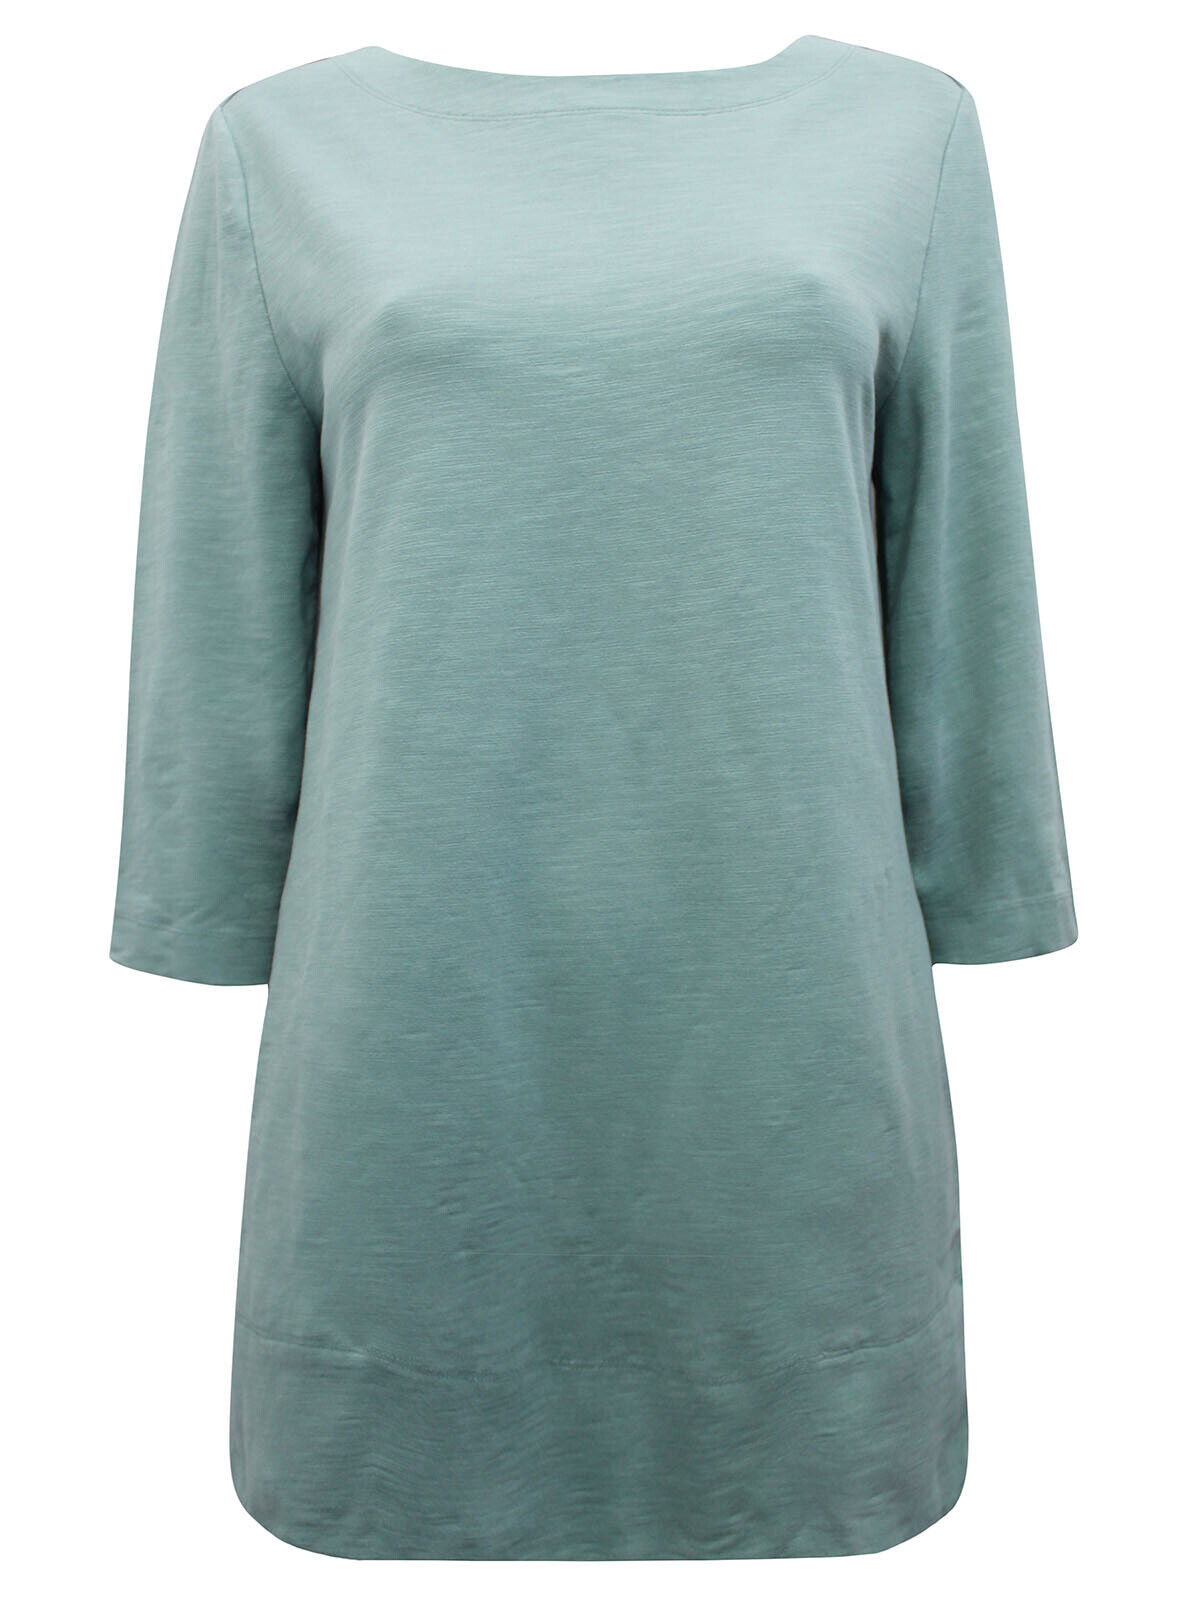 EX SEASALT Sea Green Cotton 3/4 Sleeve Tunic Sizes 8 12 14 16 18 20 22 24 26/28